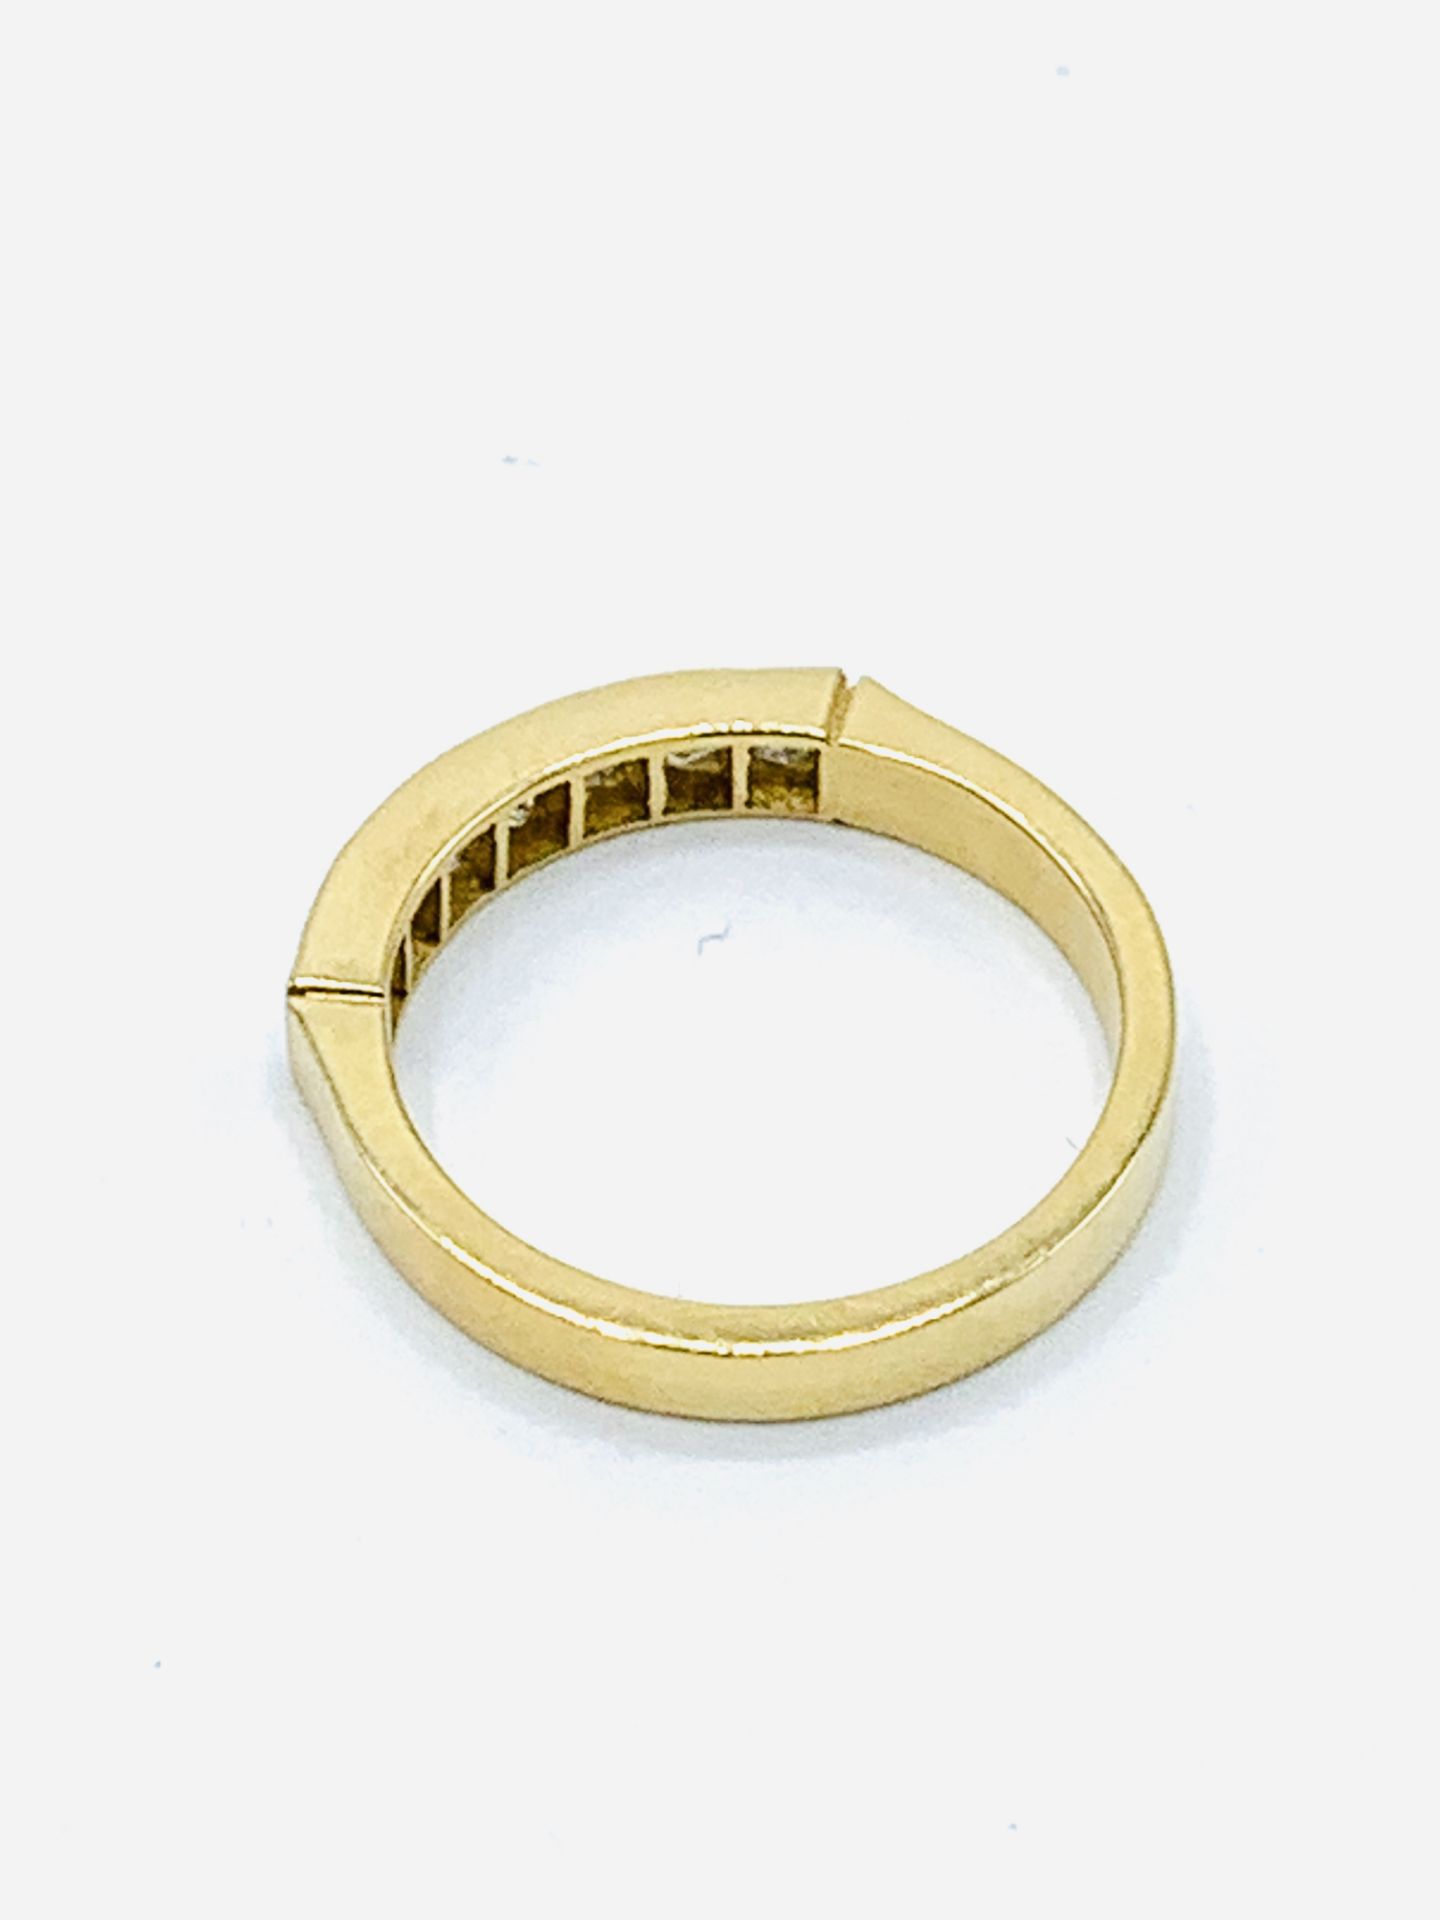 Gold and princess cut diamond half eternity ring - Image 3 of 4